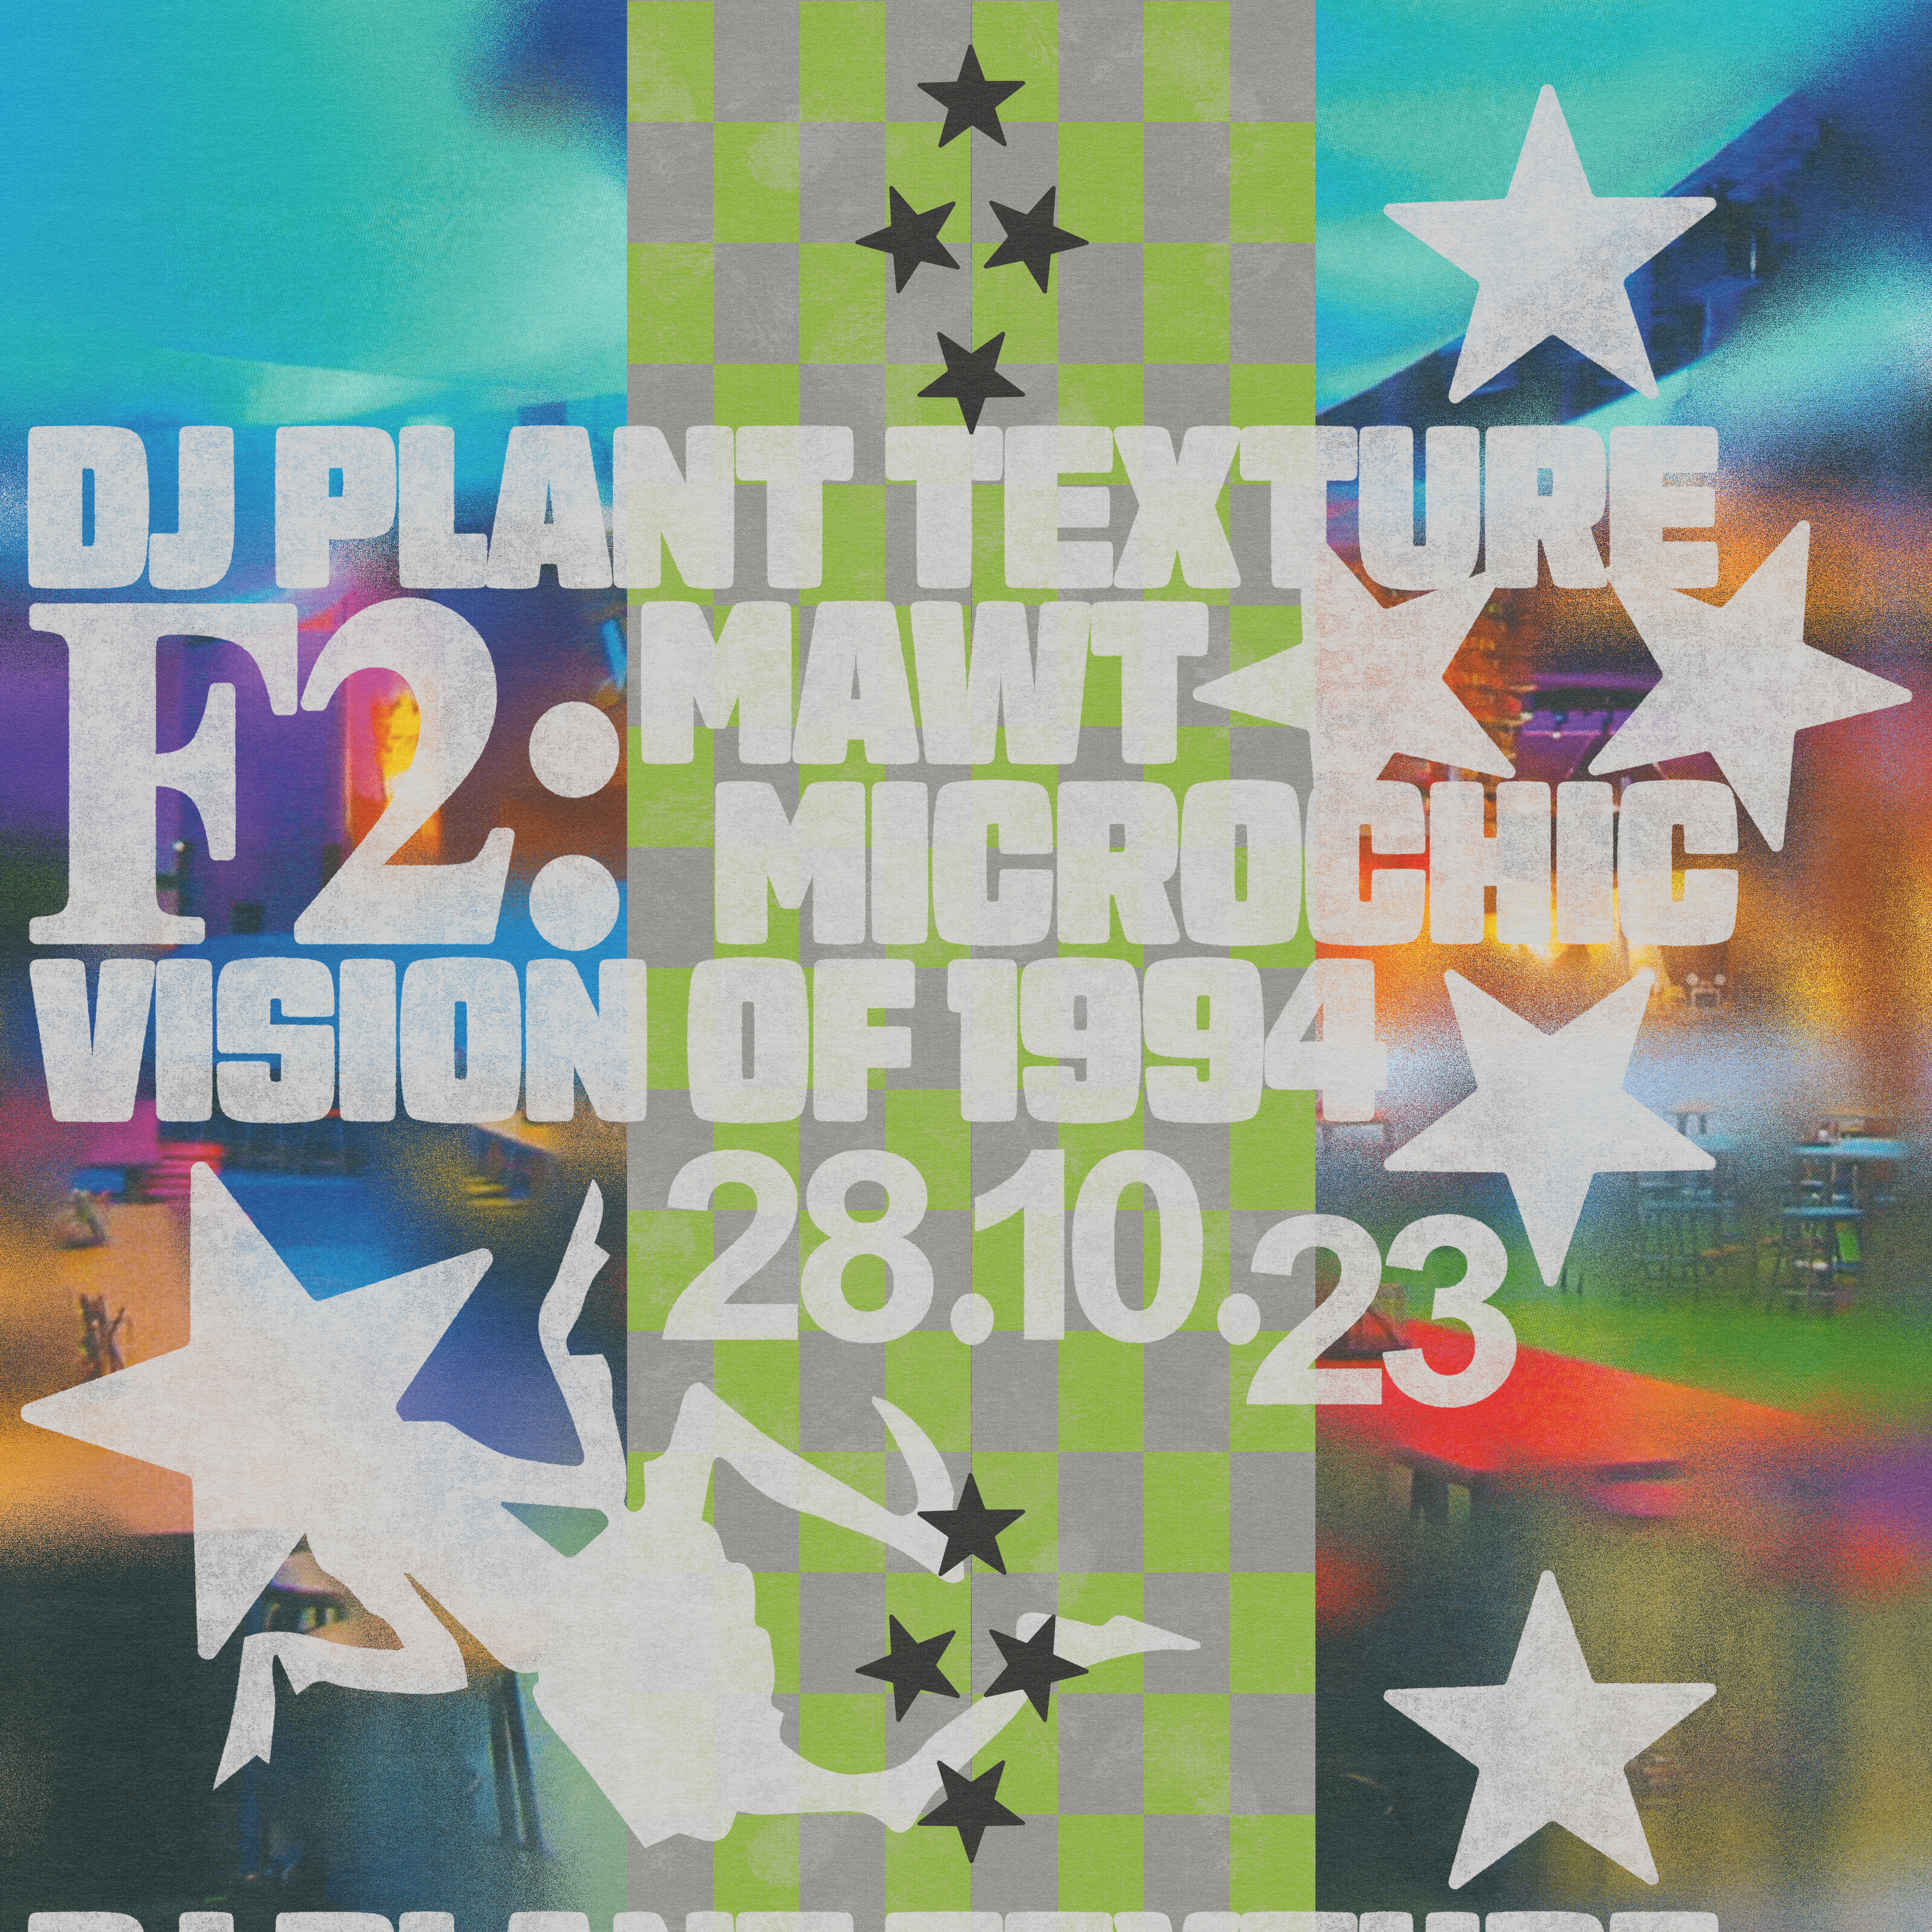 F2: DJ Plant Texture / Mawt / Microchic / Vision of 1994 - フライヤー表